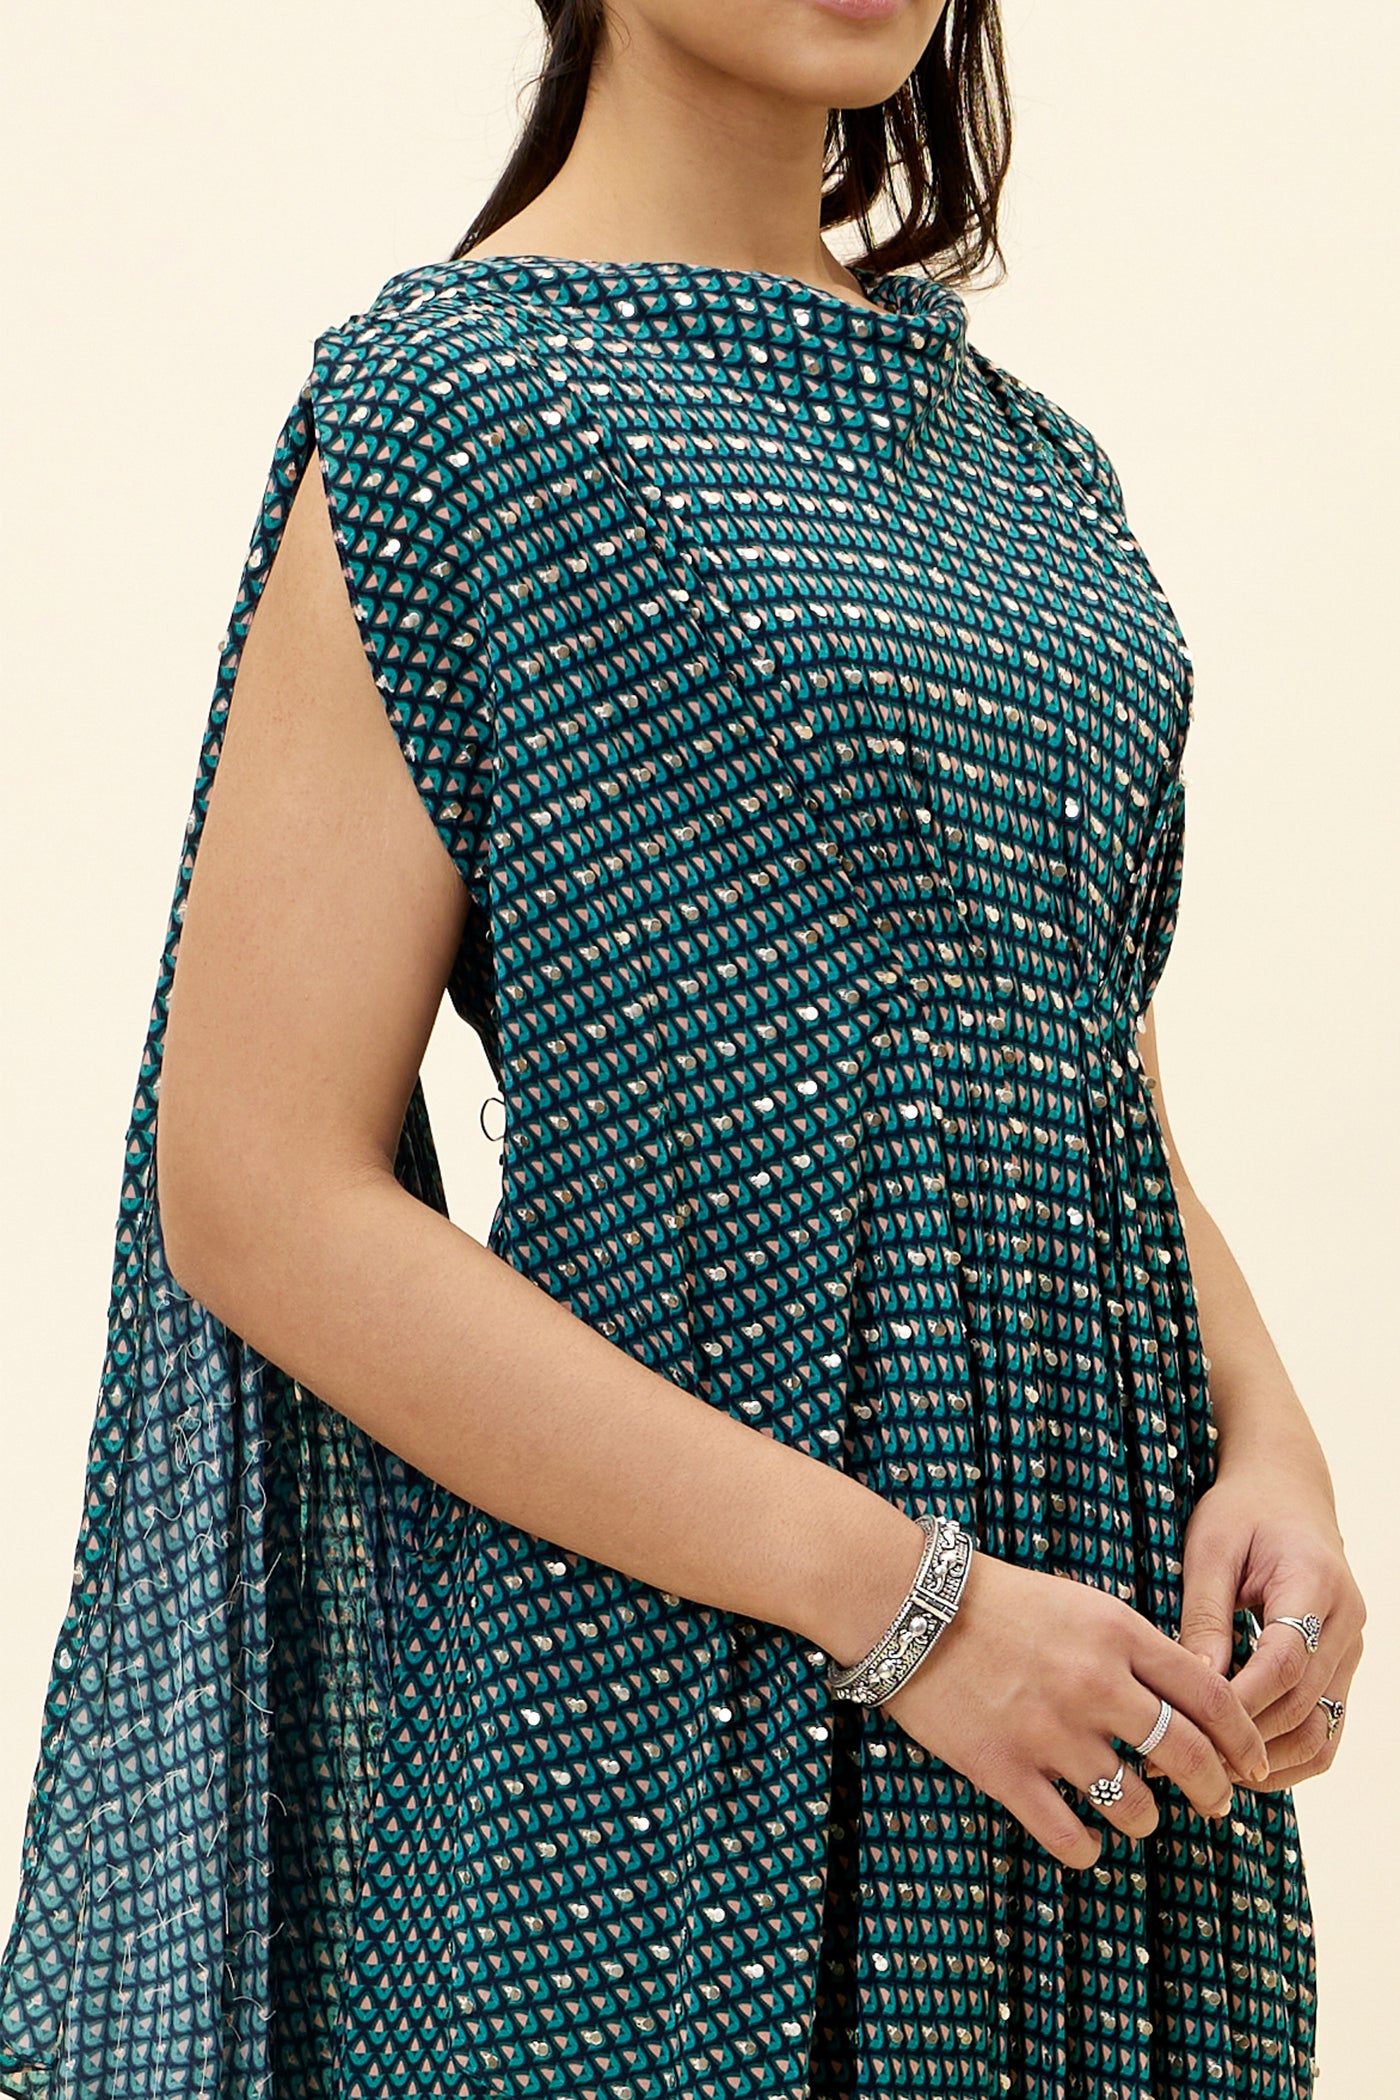 sva Blue Butti Print Embellished Draped Top Teamed With Pants online shopping melange singapore indian designer wear